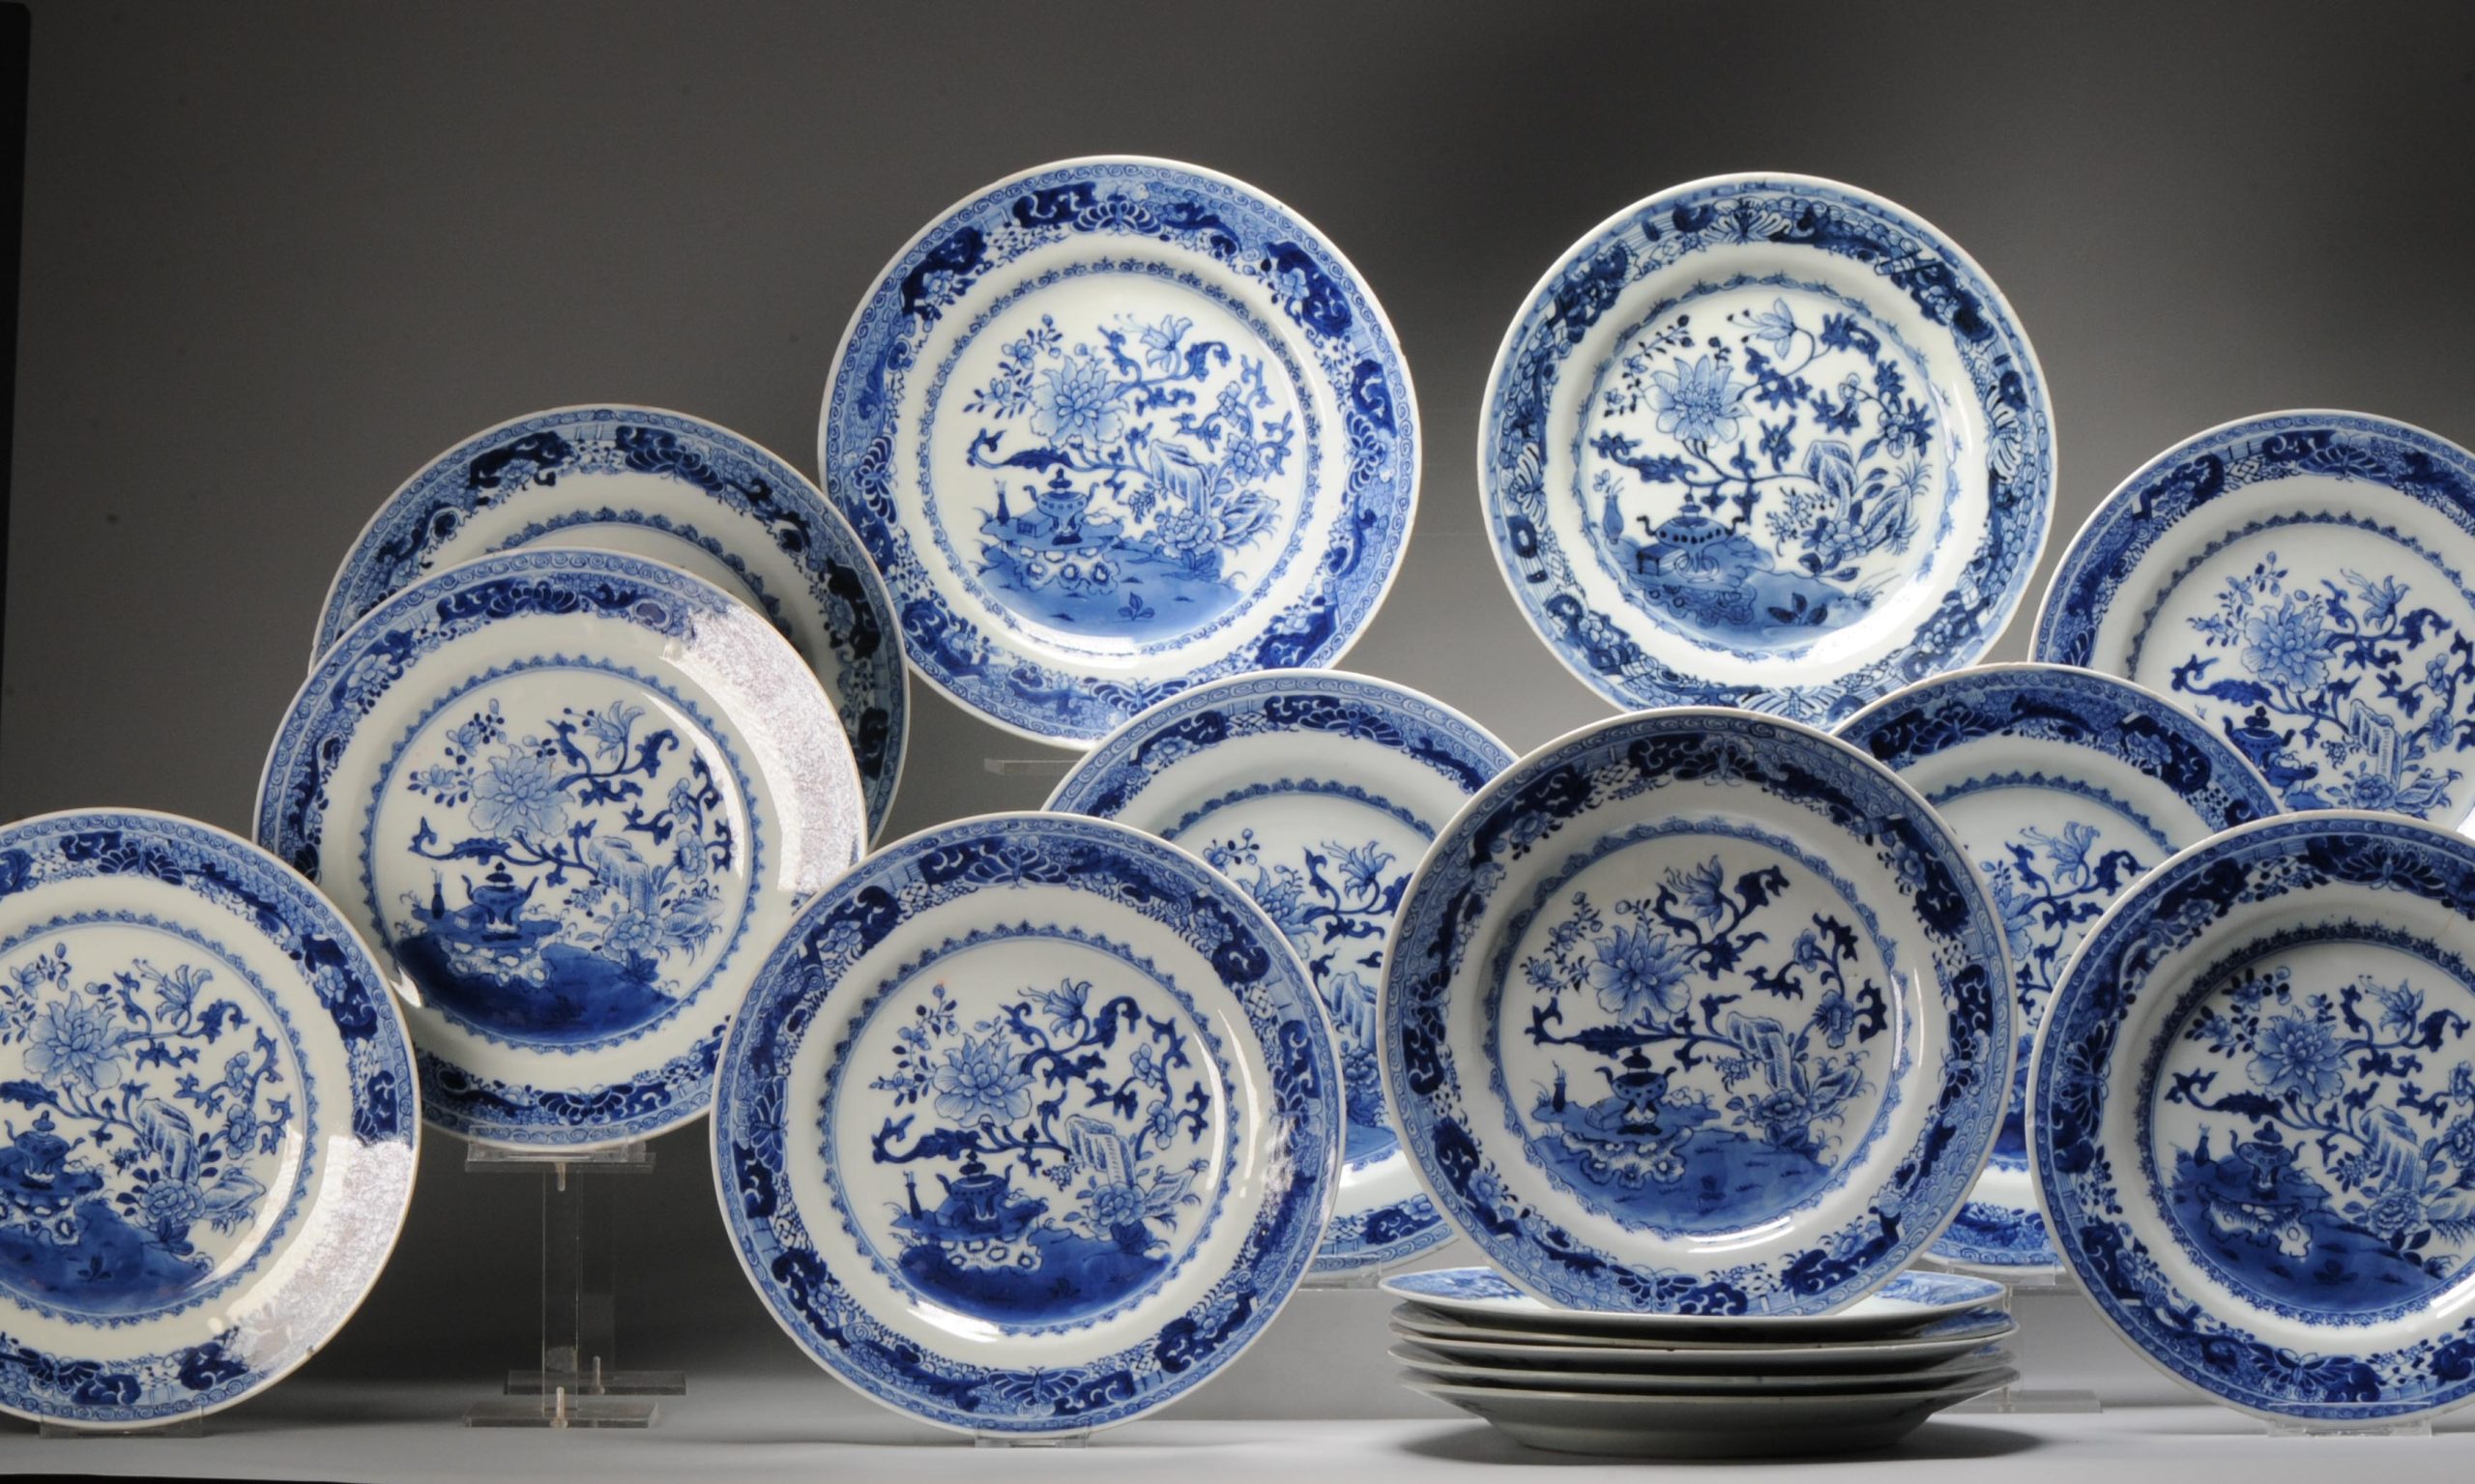 #16 Antique Chinese Porcelain 18th C Kangxi/Yongzheng Period Blue White Set Dinner Plates